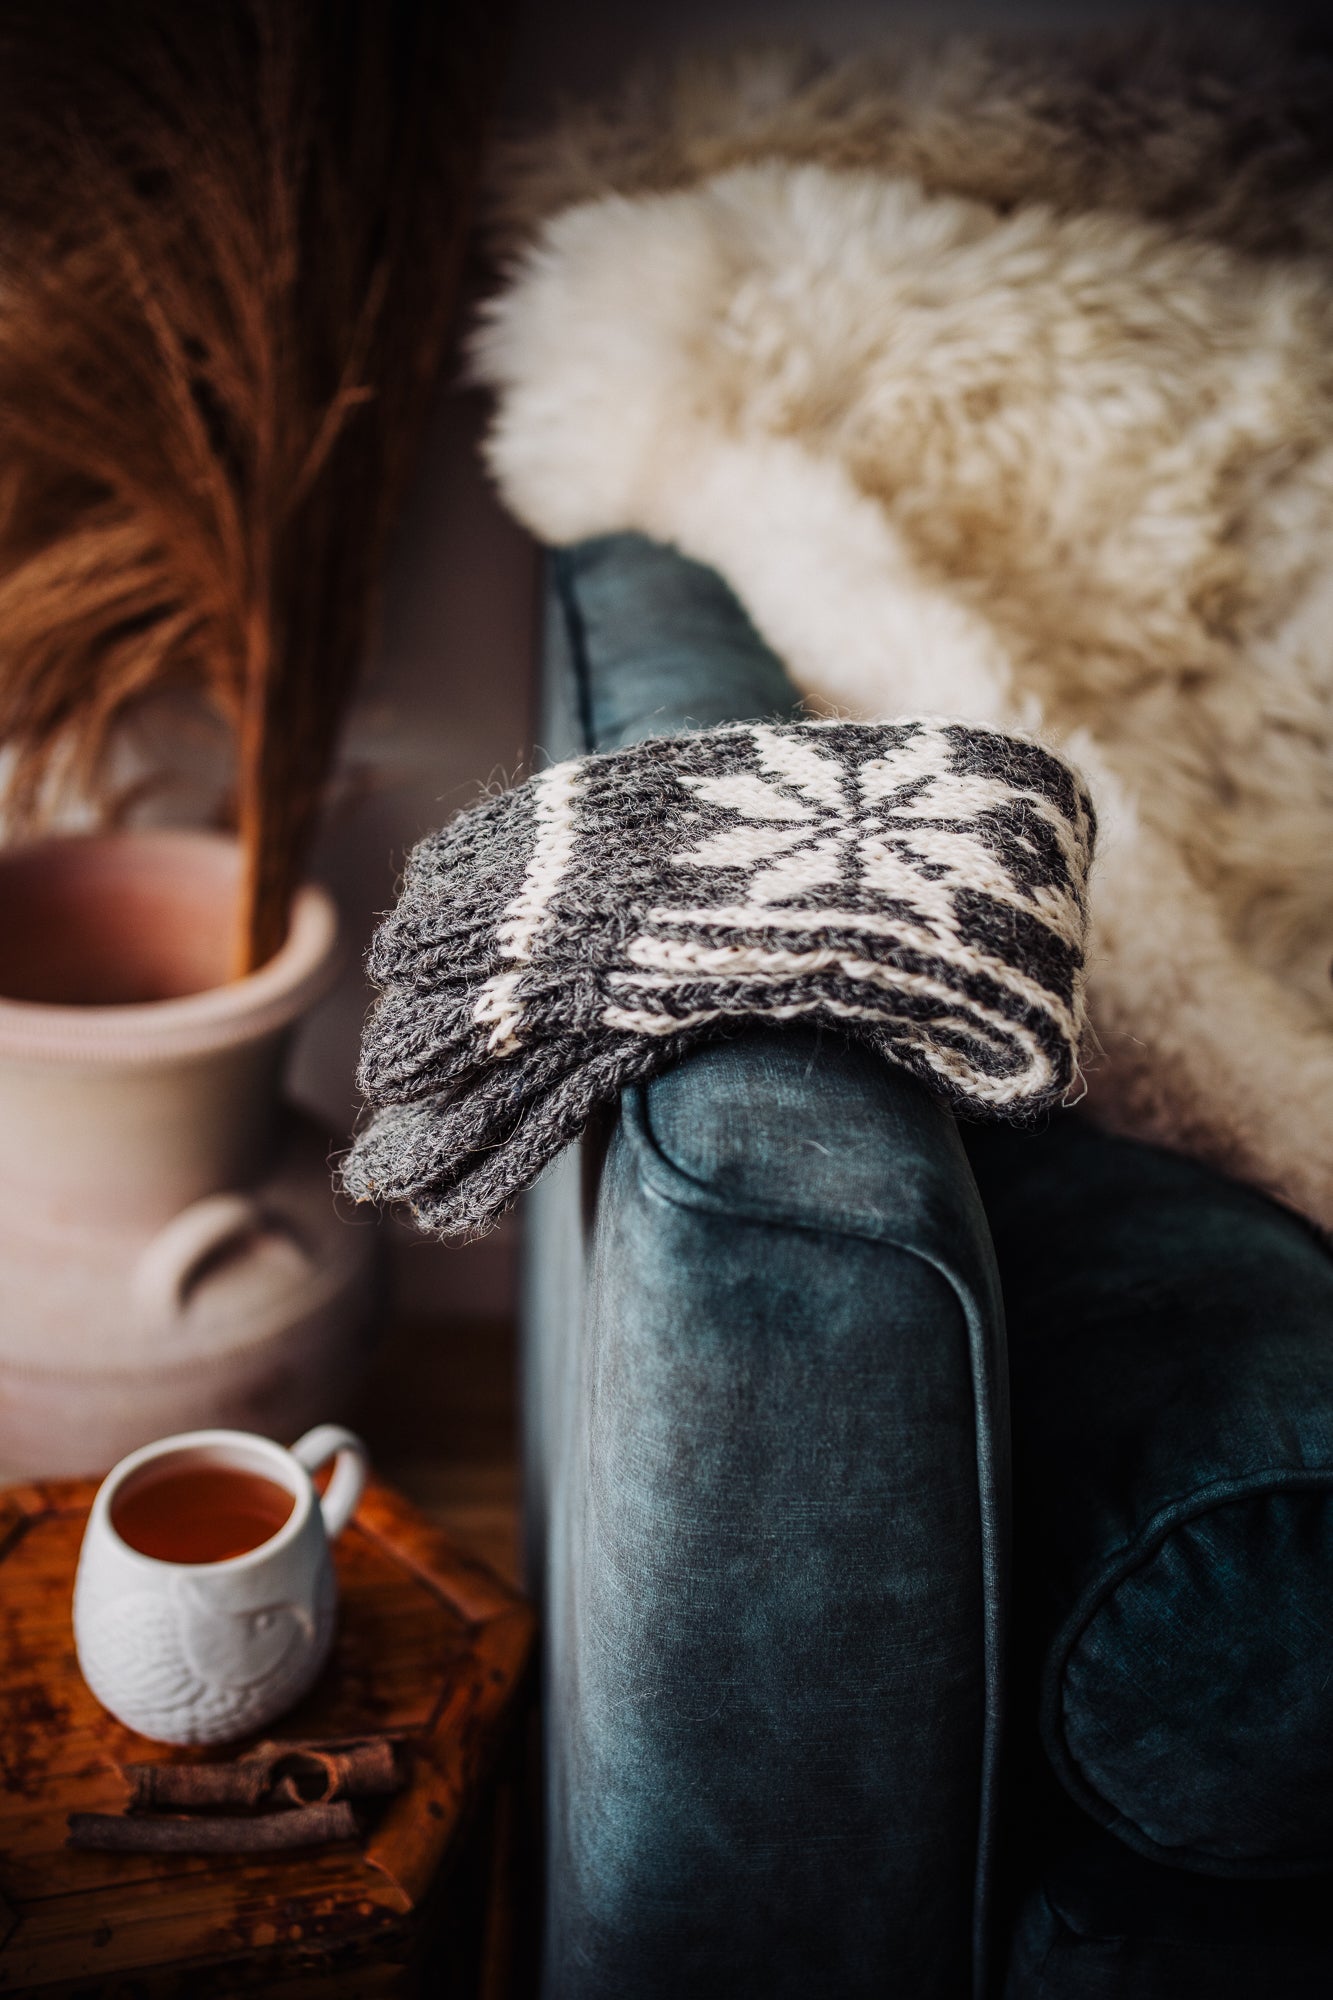 Sheepskin on the sofa , warm winter tea and woollen sock. Winter gift ideas for him